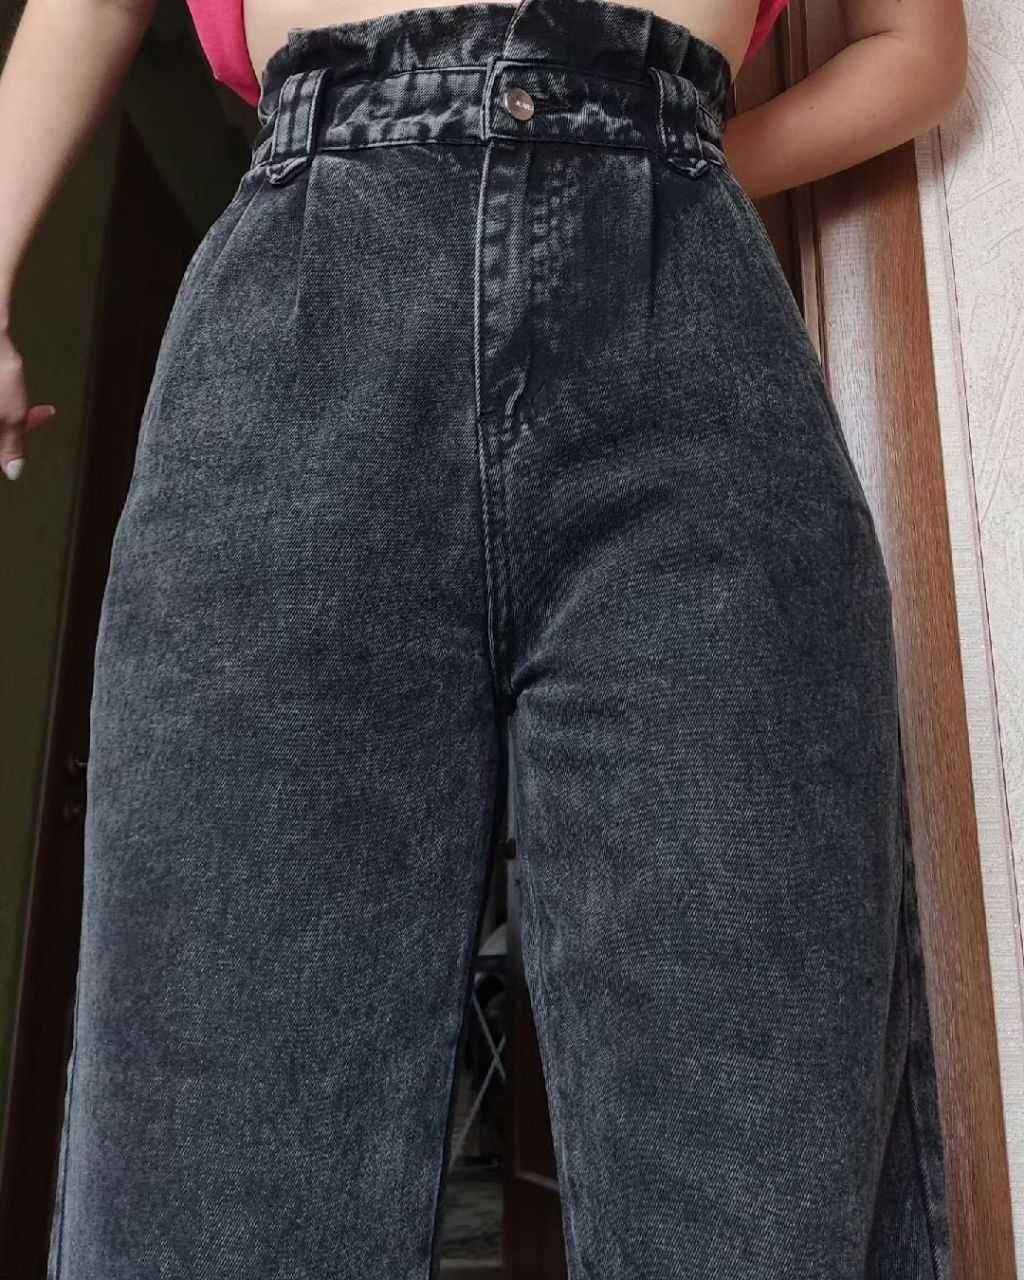 Джинси висока посадка, тканина джинс